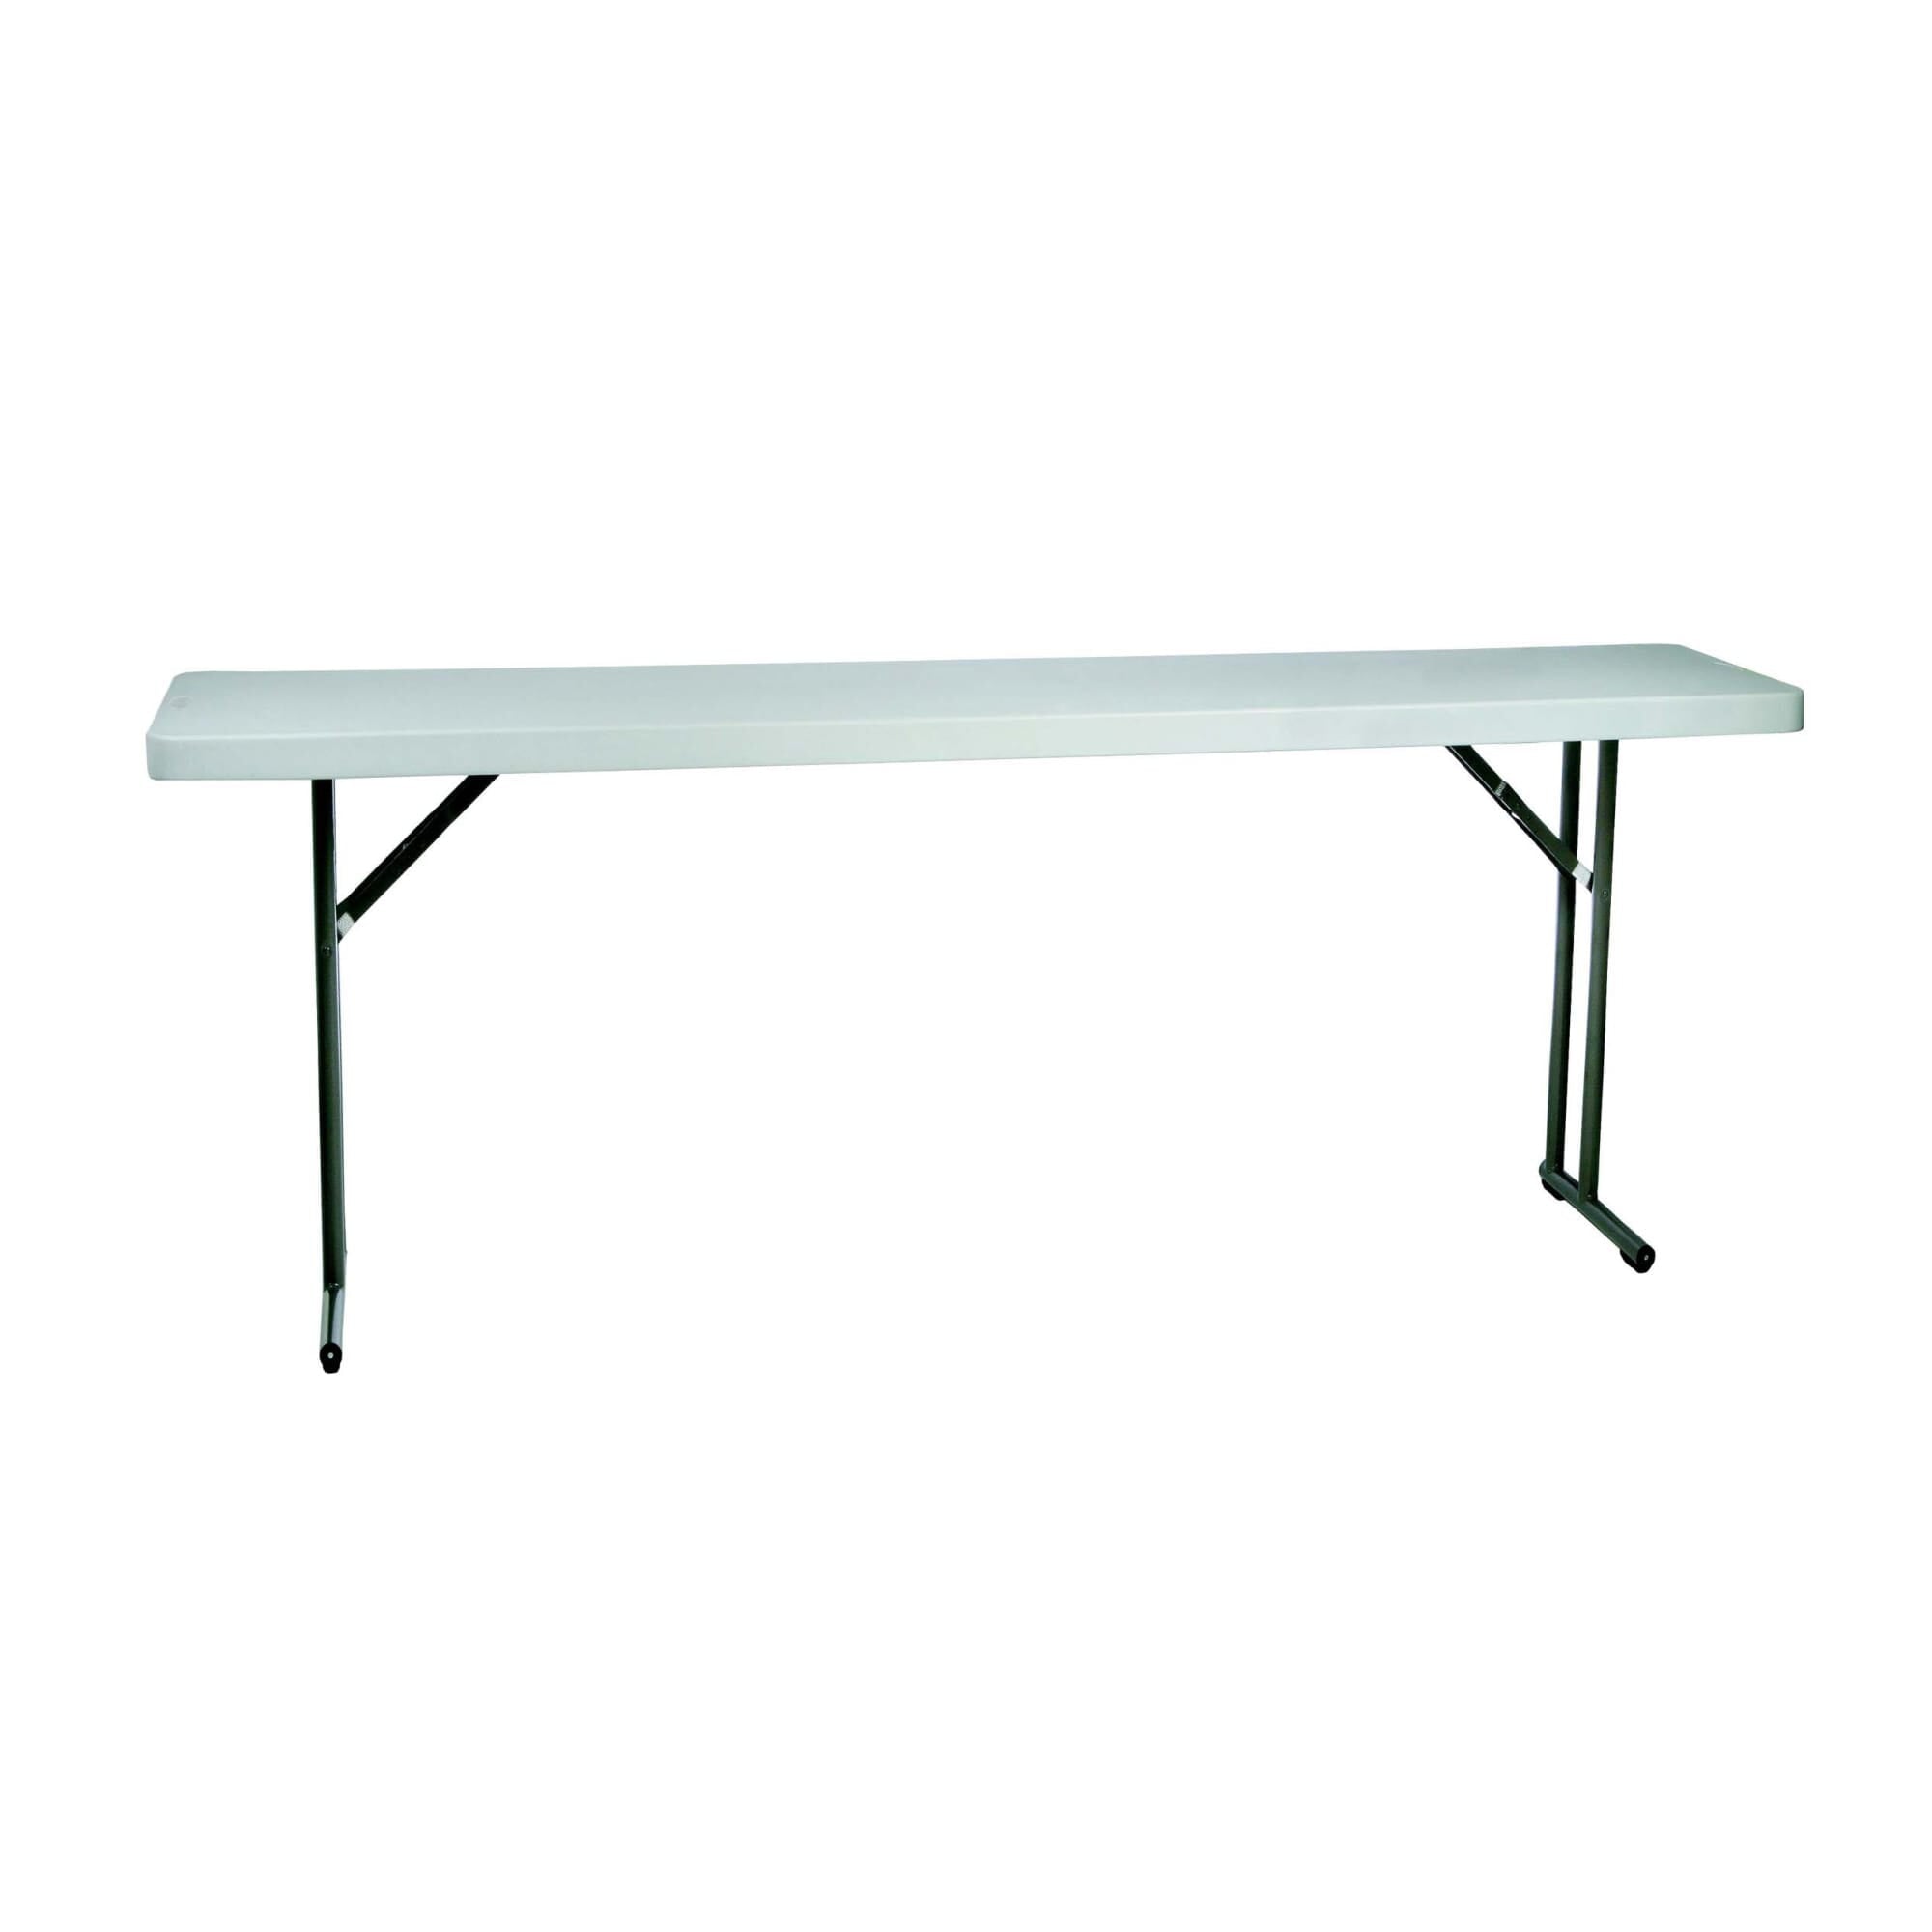 Garbar bach rectangular folding table indoors, outdoors